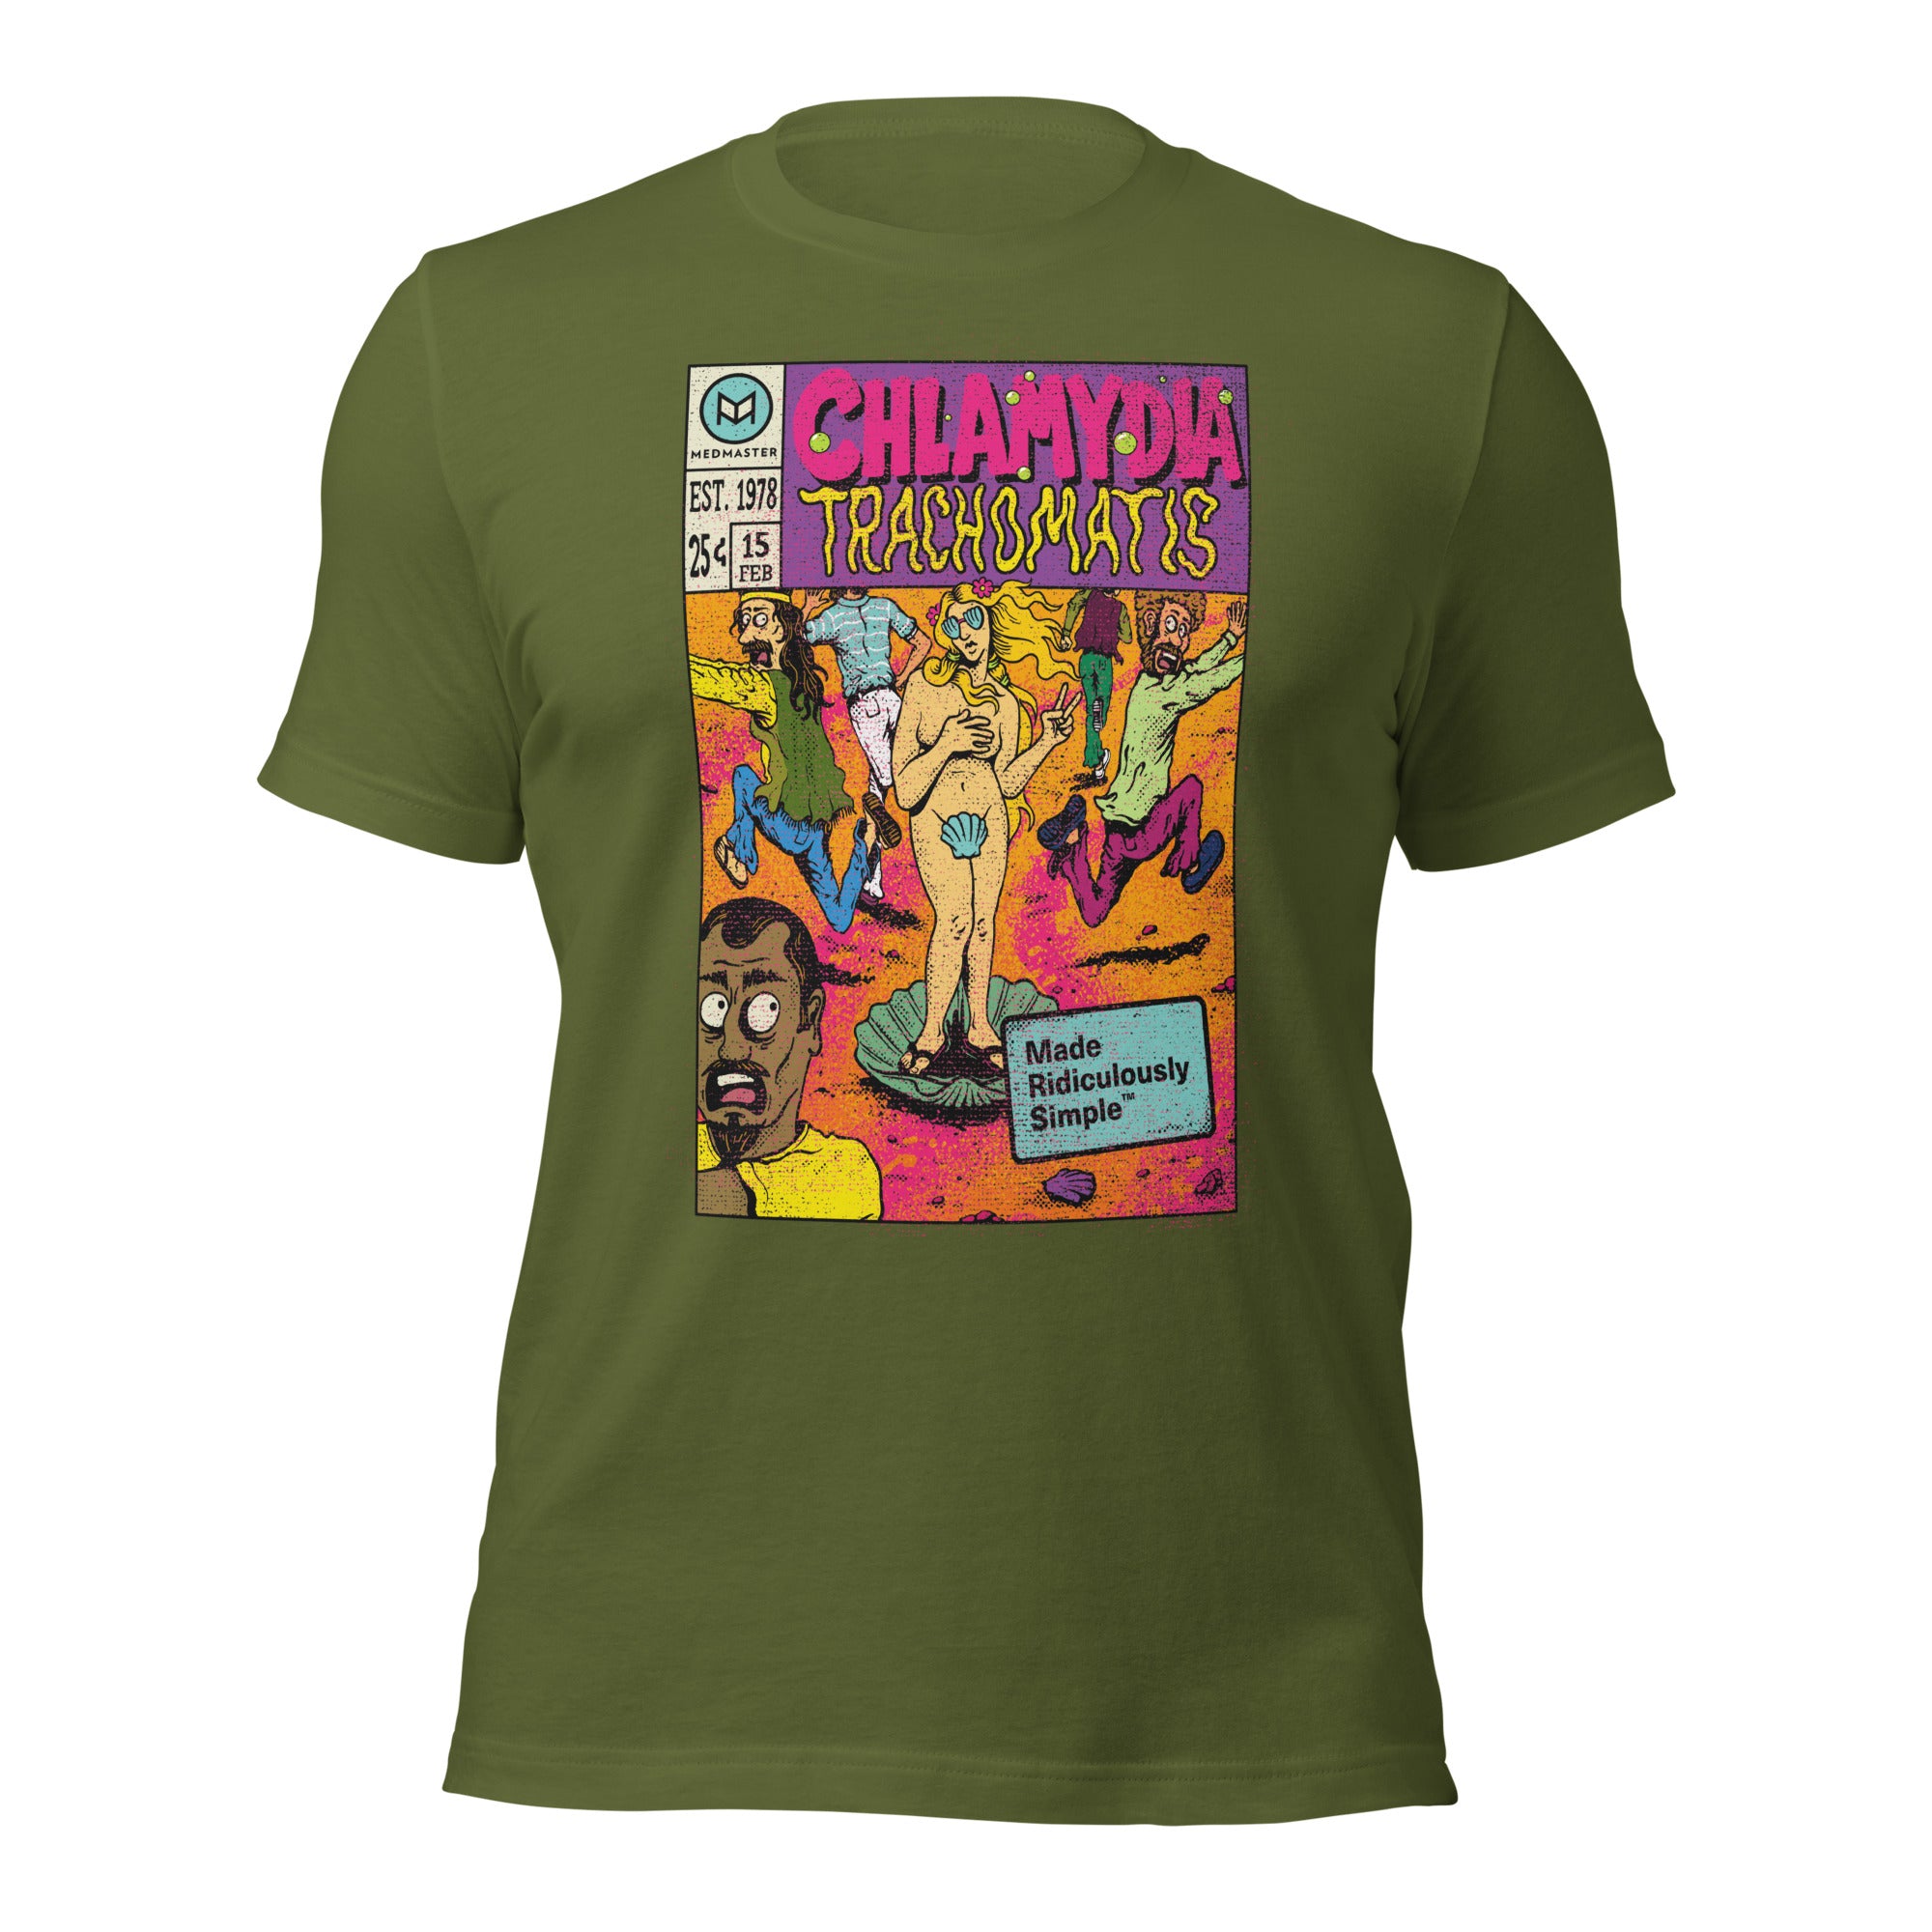 Chlamydia Trachomatis "Teach-Shirt"